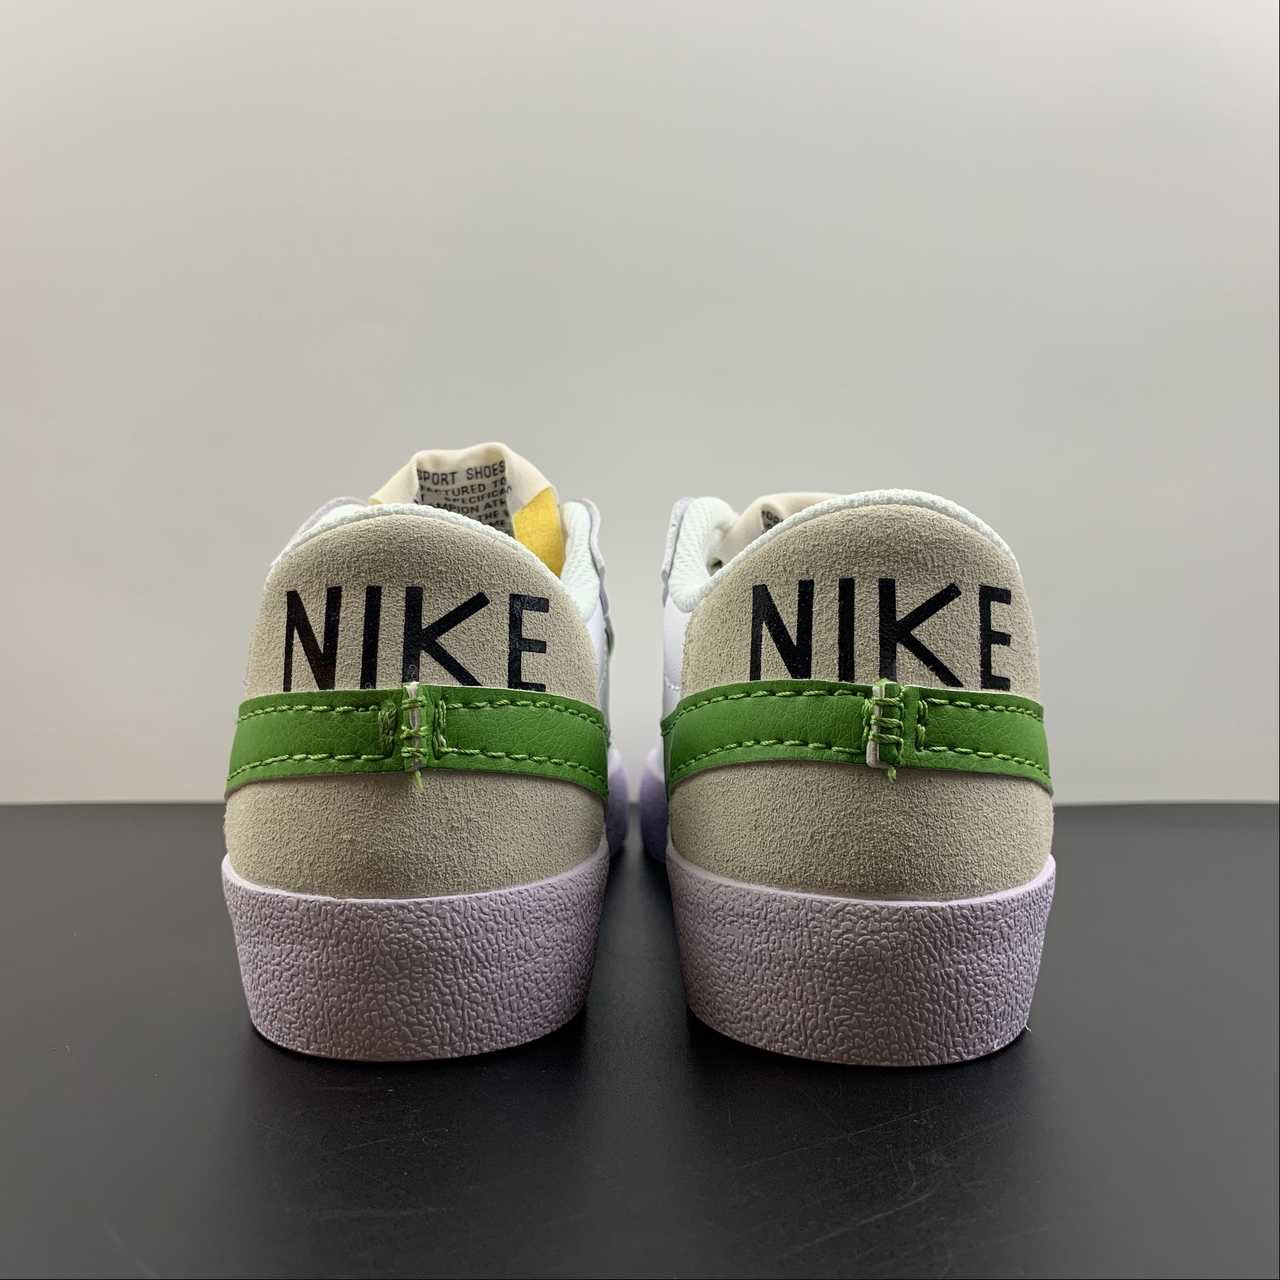 Nike blazer low light green